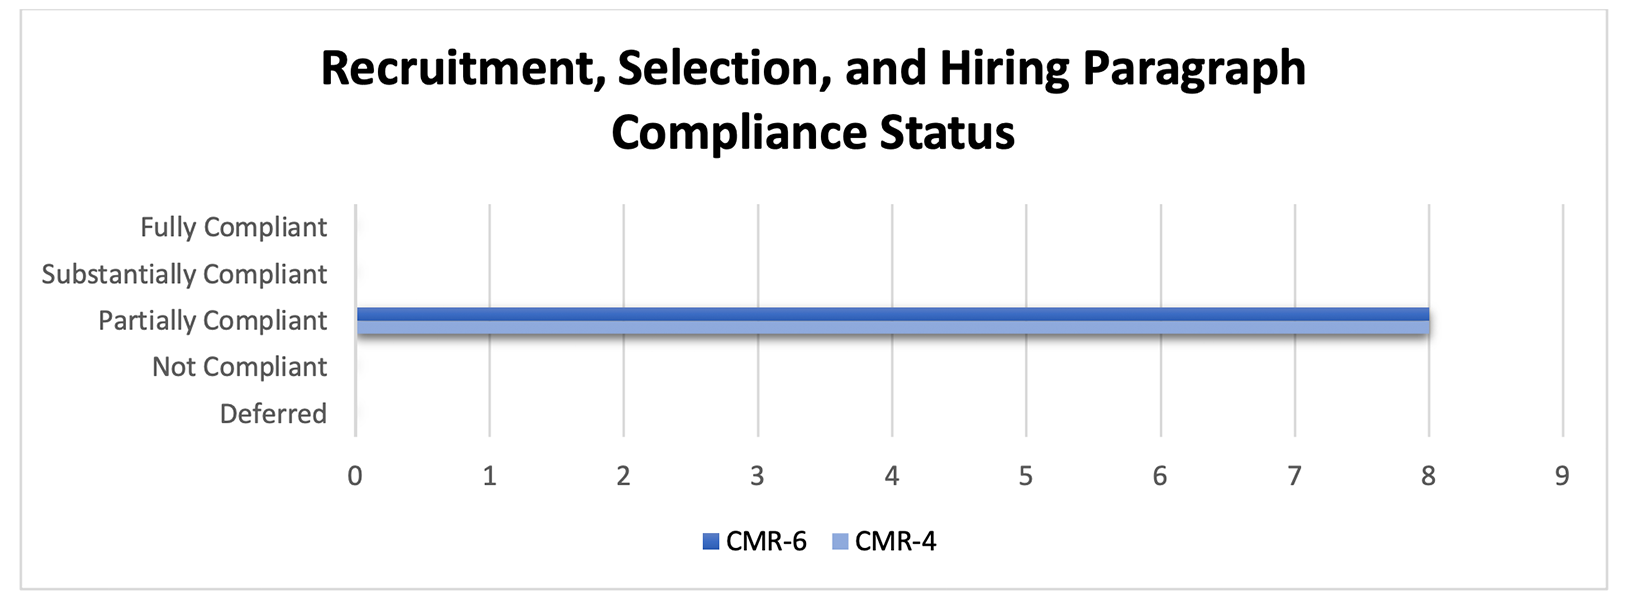 Figure 4. Recruitment, Selection, Hiring: Paragraph Compliance Status